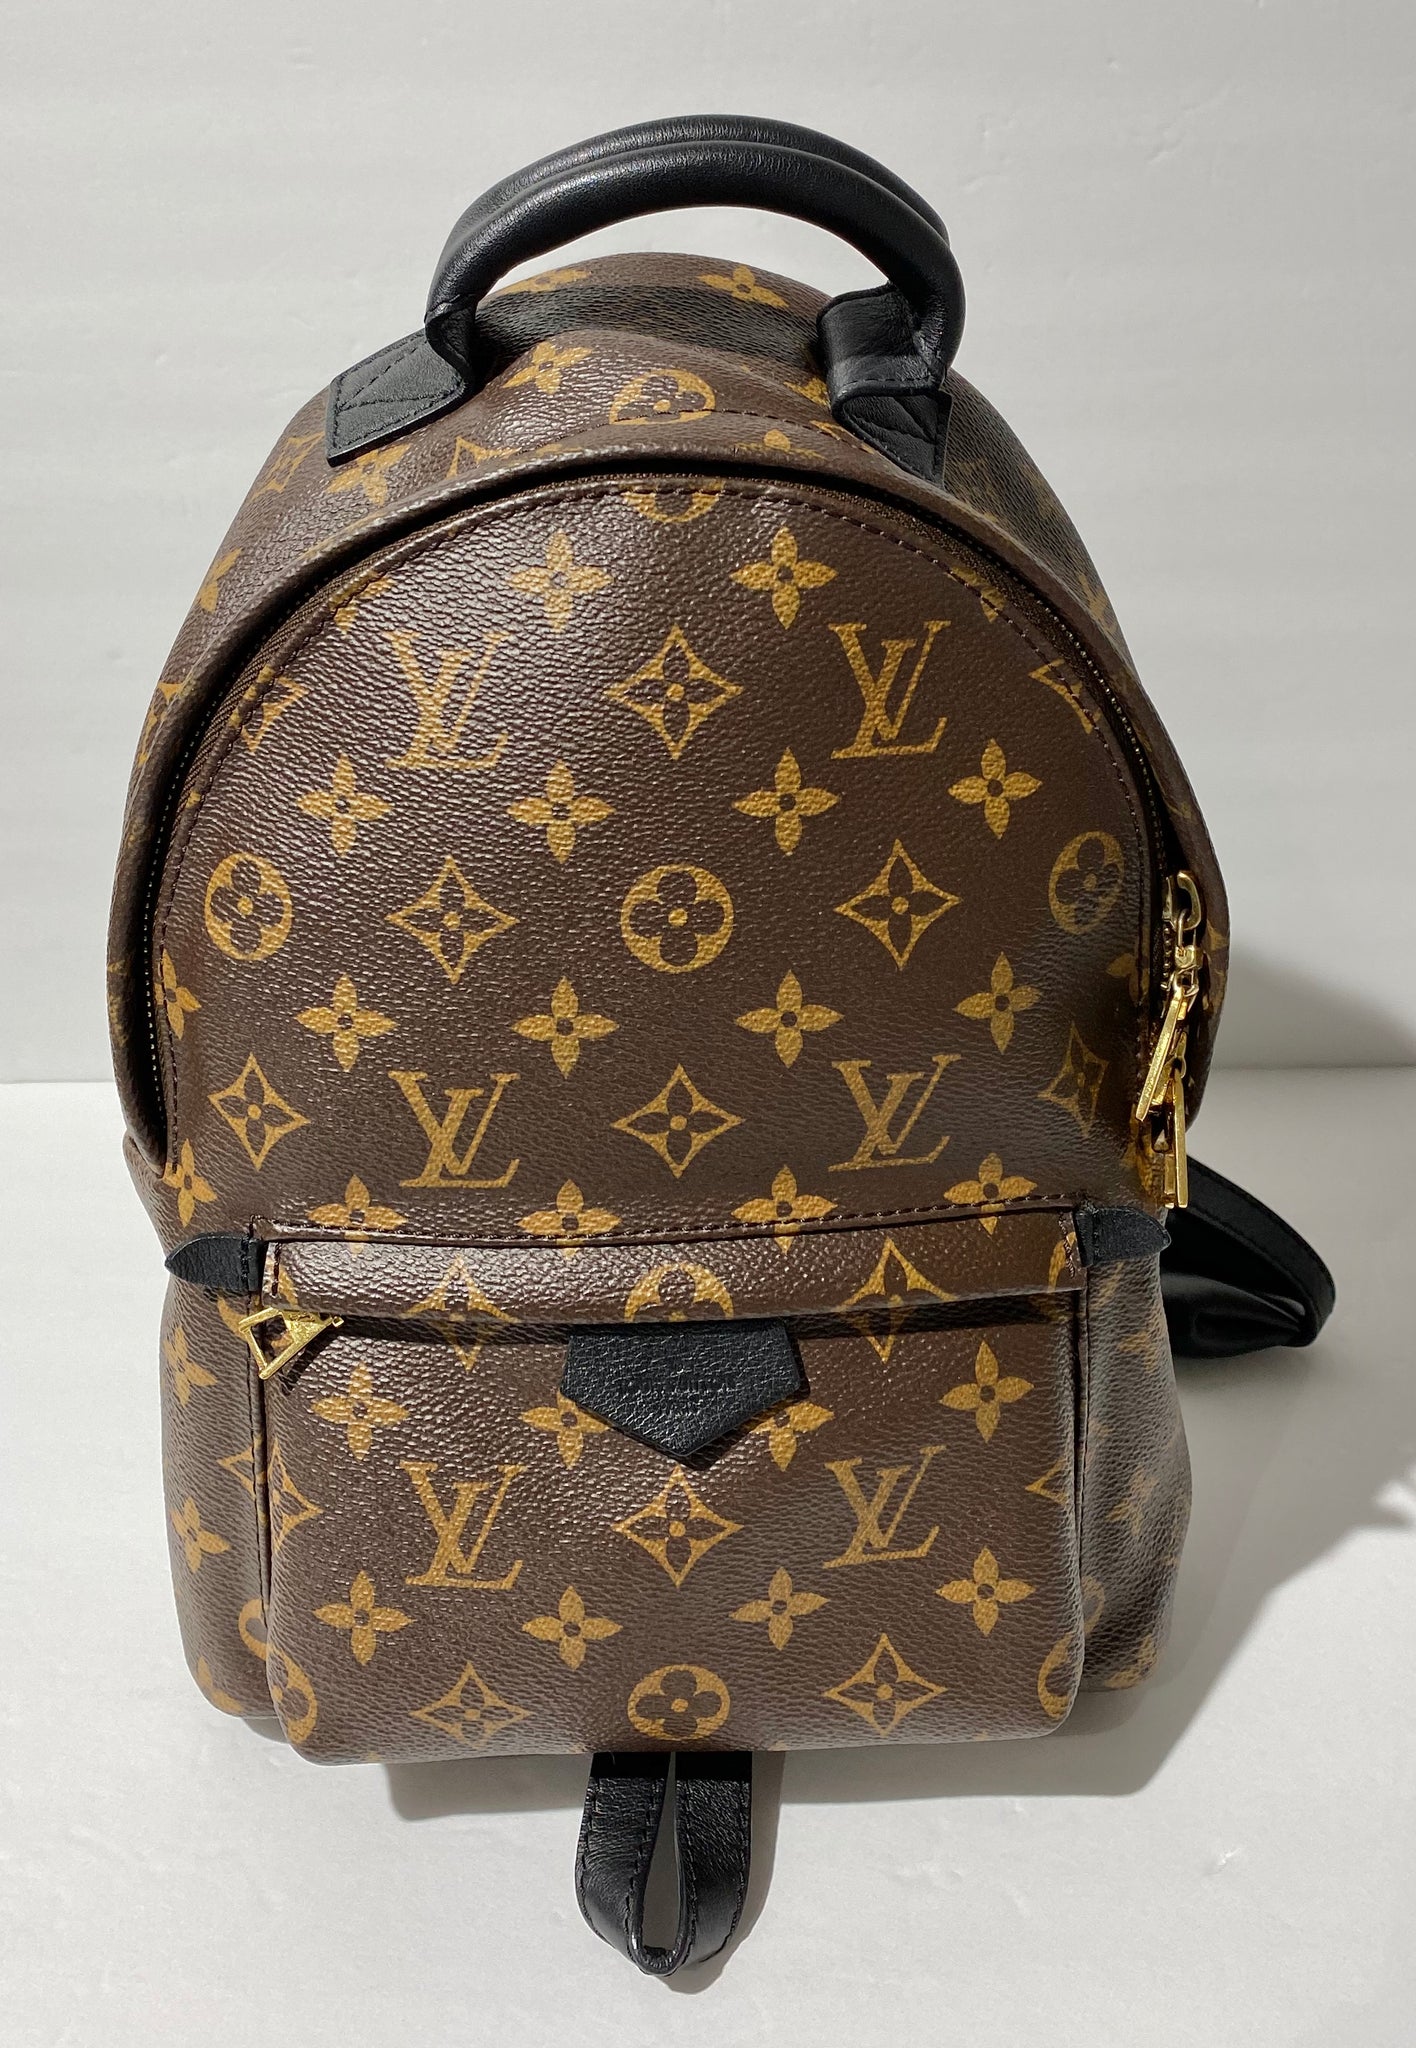 AUTHENTIC Louis Vuitton Palm Springs Monogram Backpack PM PREOWNED (WB –  Jj's Closet, LLC